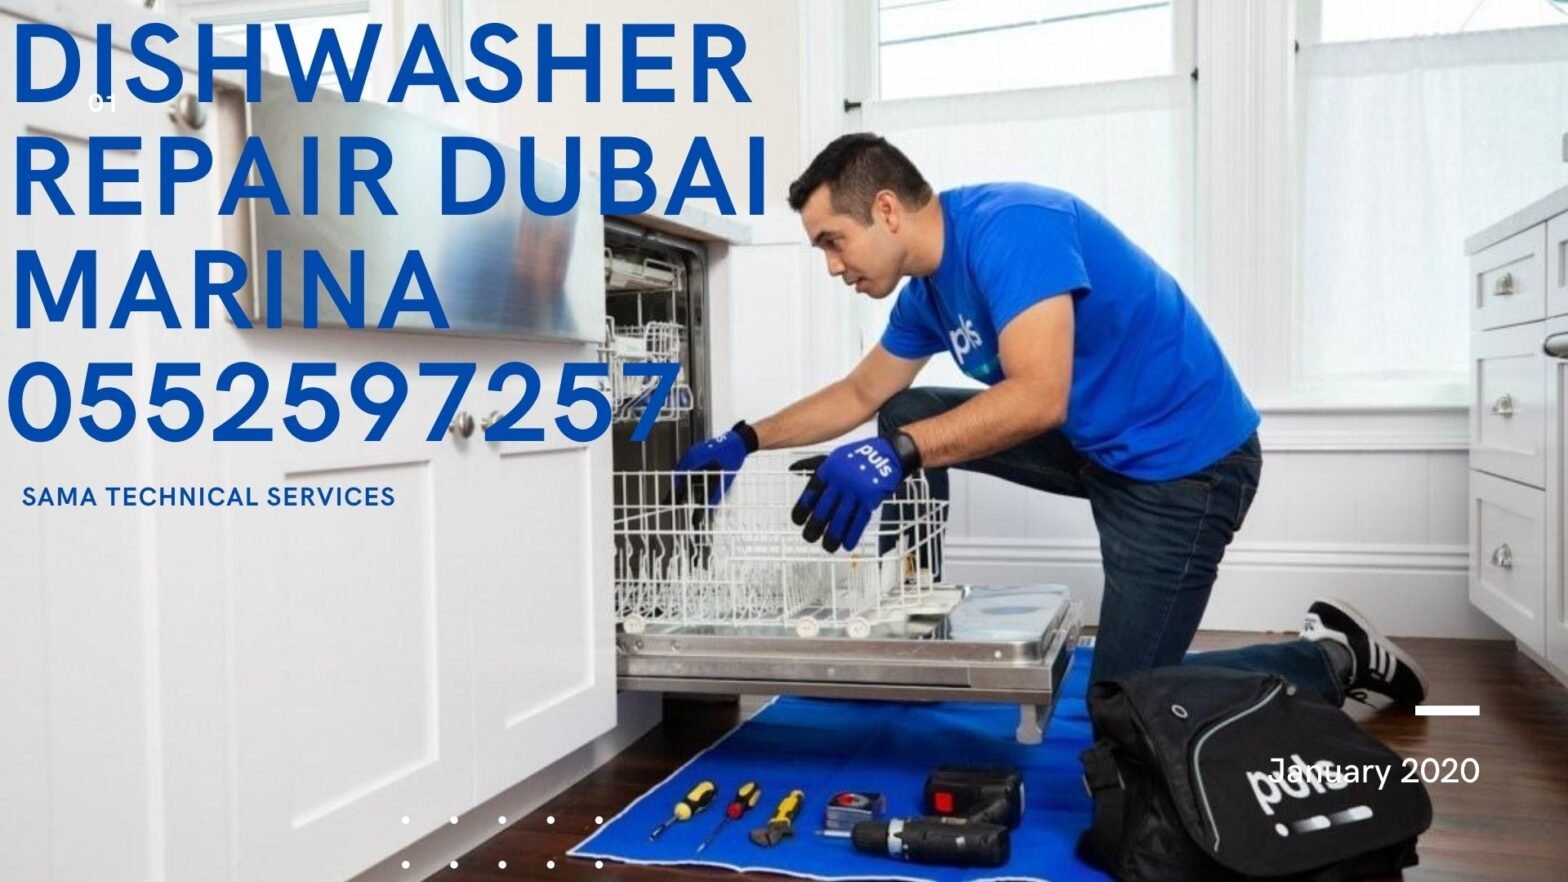 Dishwasher repair Dubai Marina